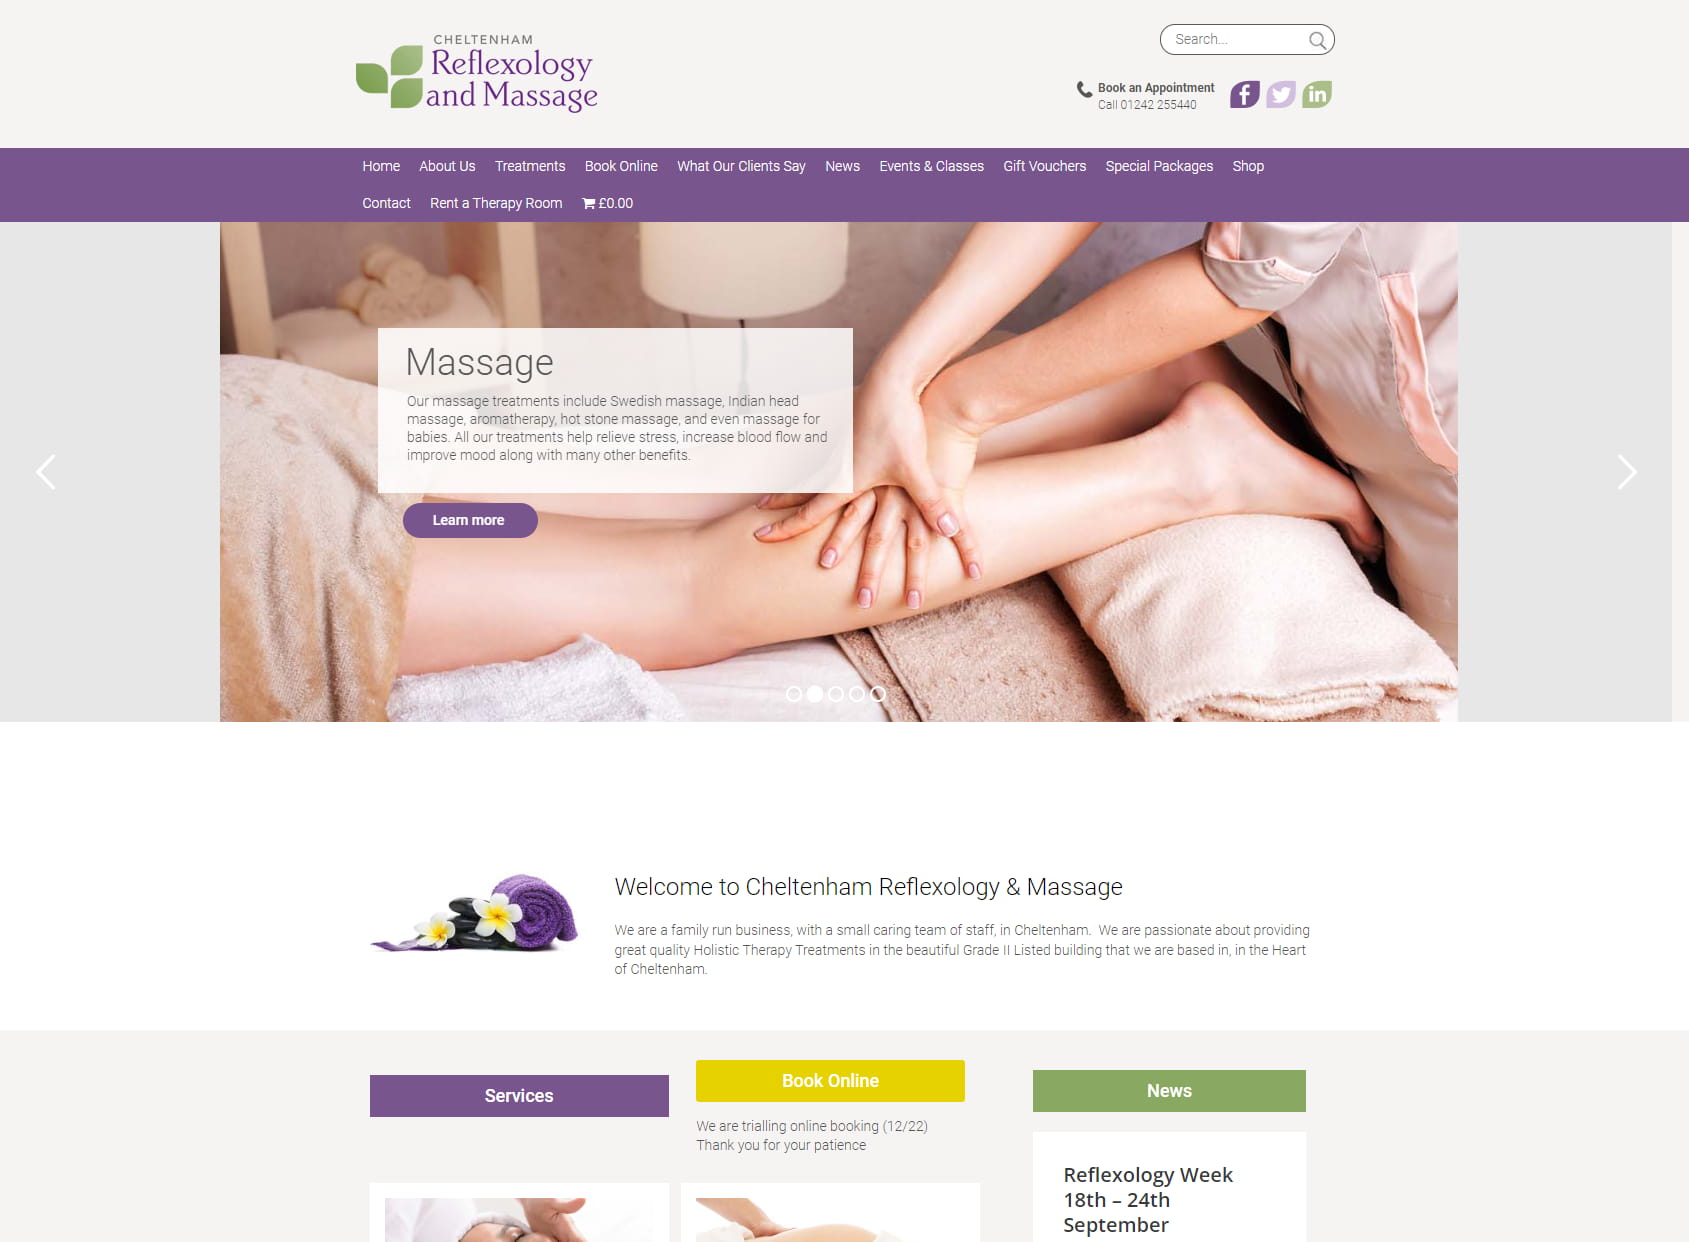 Cheltenham Reflexology and Massage